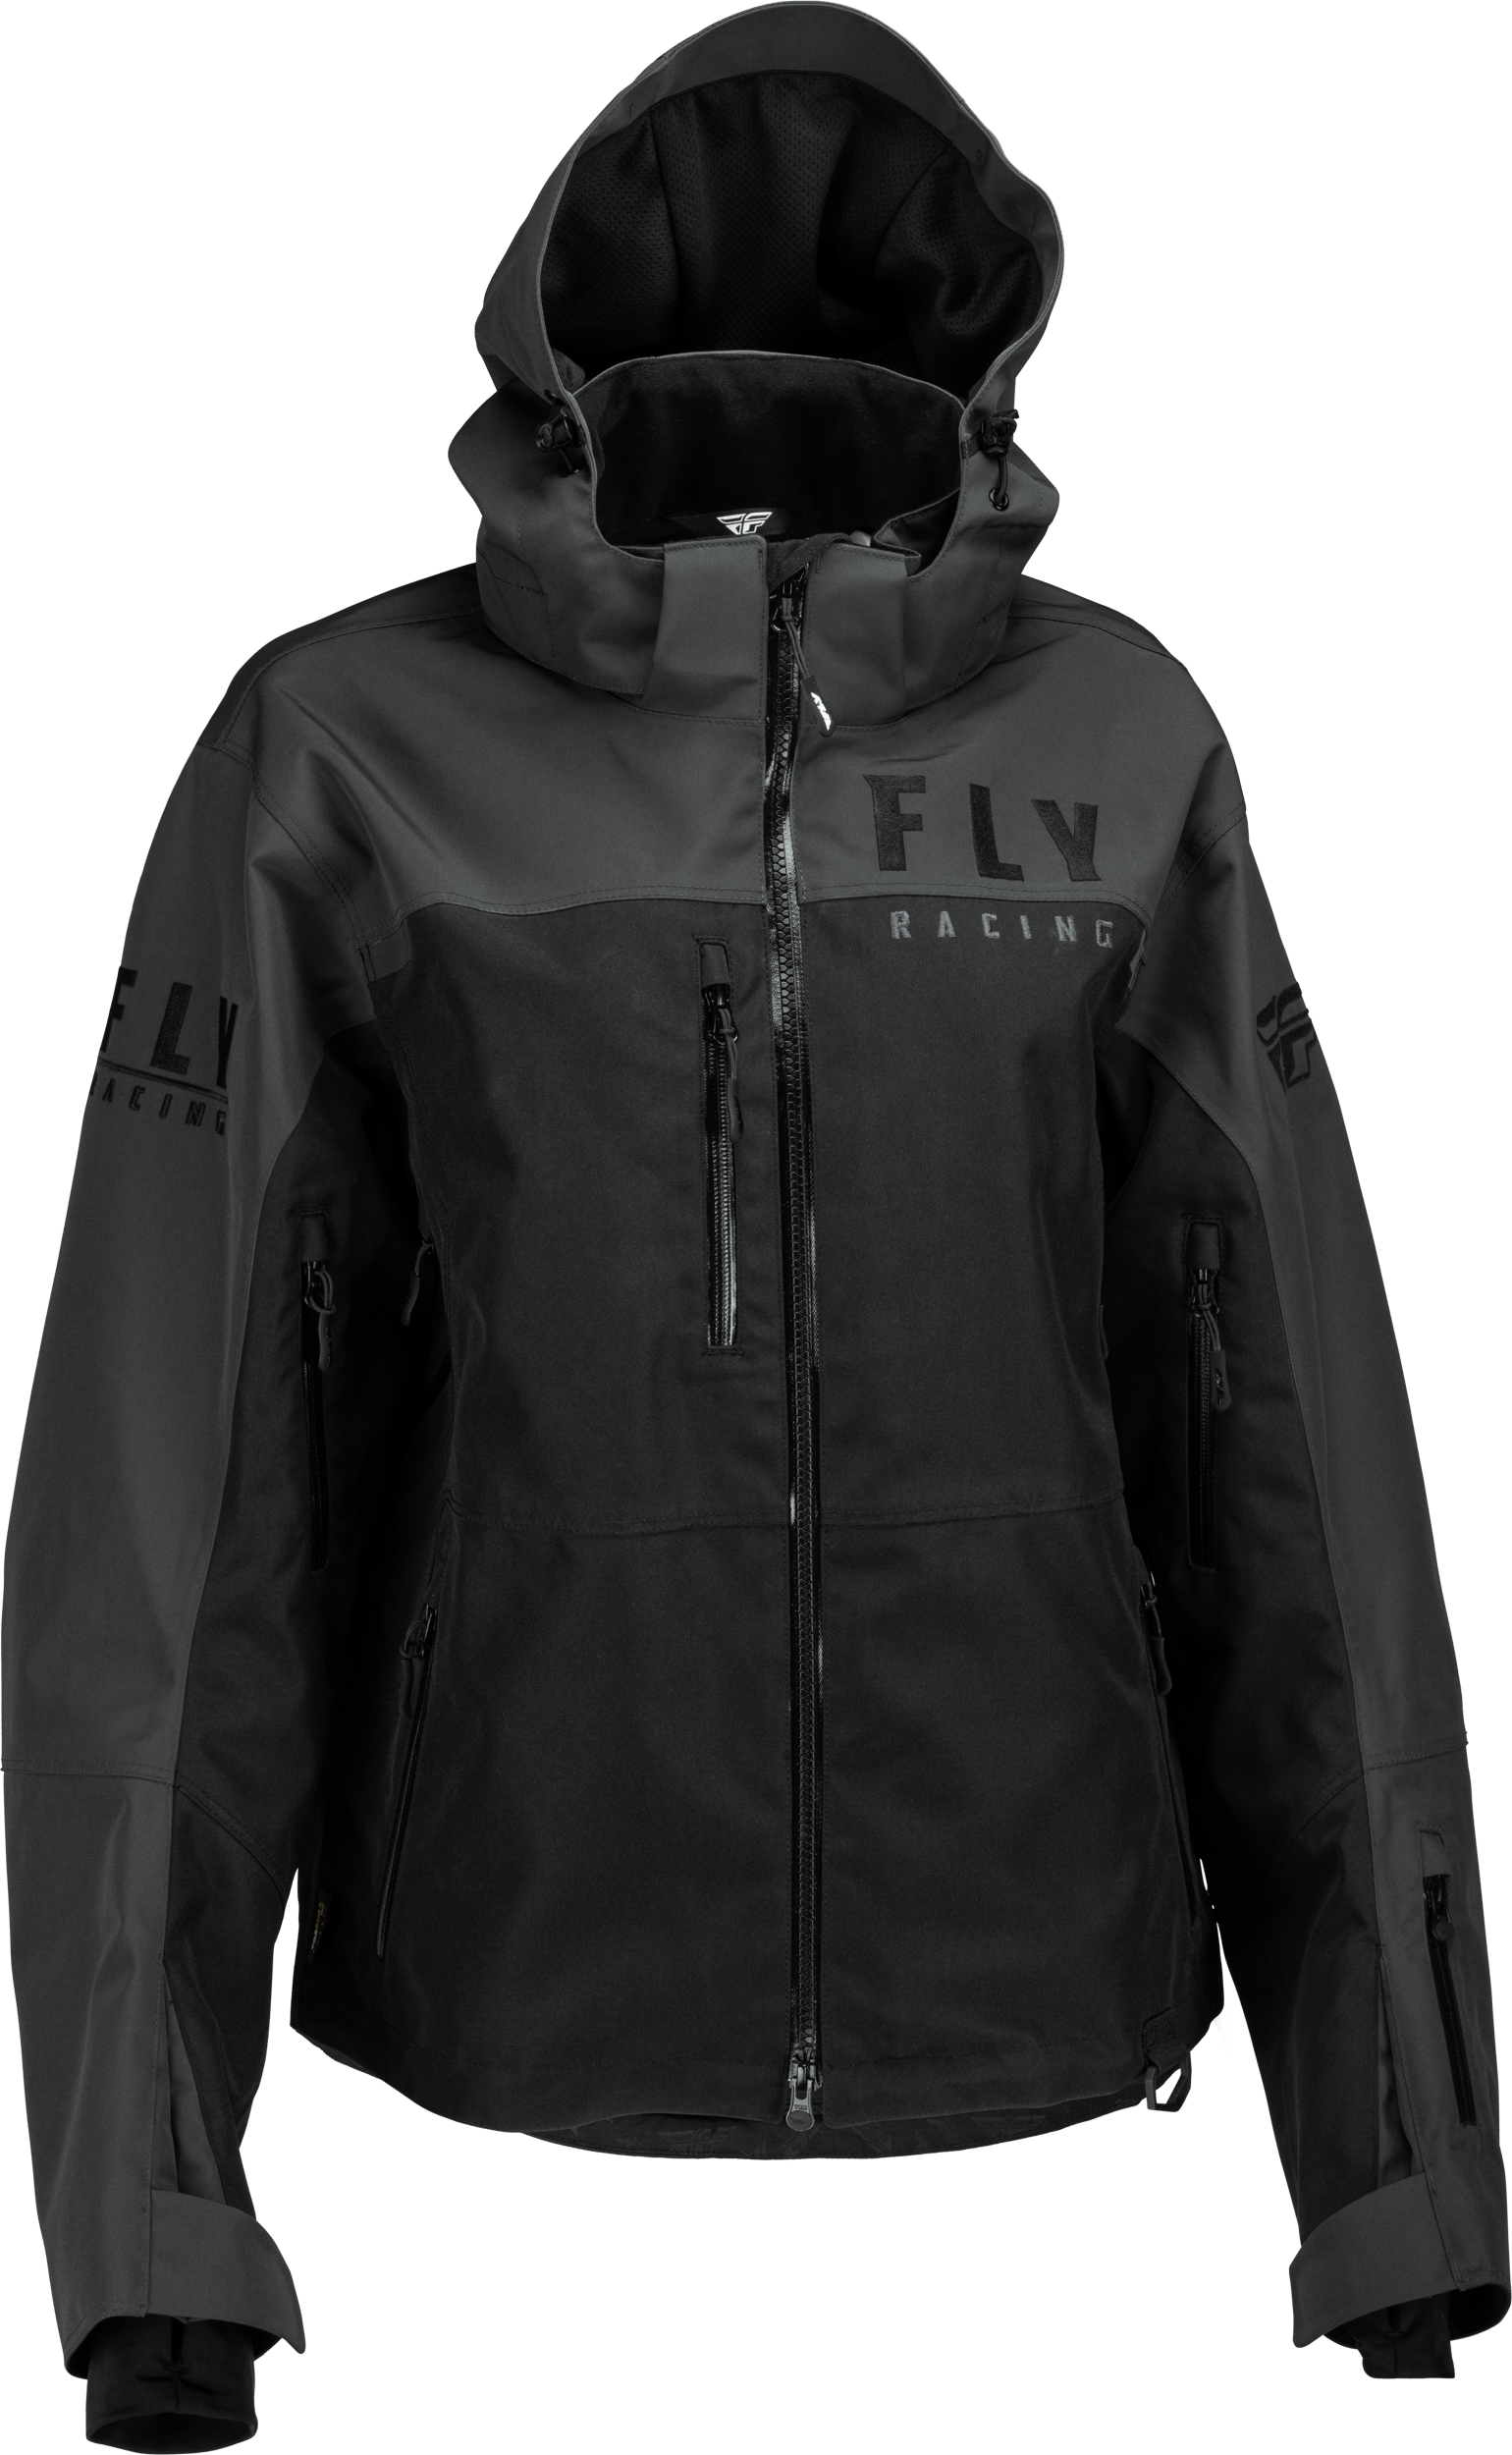 Western Powersports Jacket Black/Grey / 2X Women's Carbon Jacket By Fly Racing 470-45002X